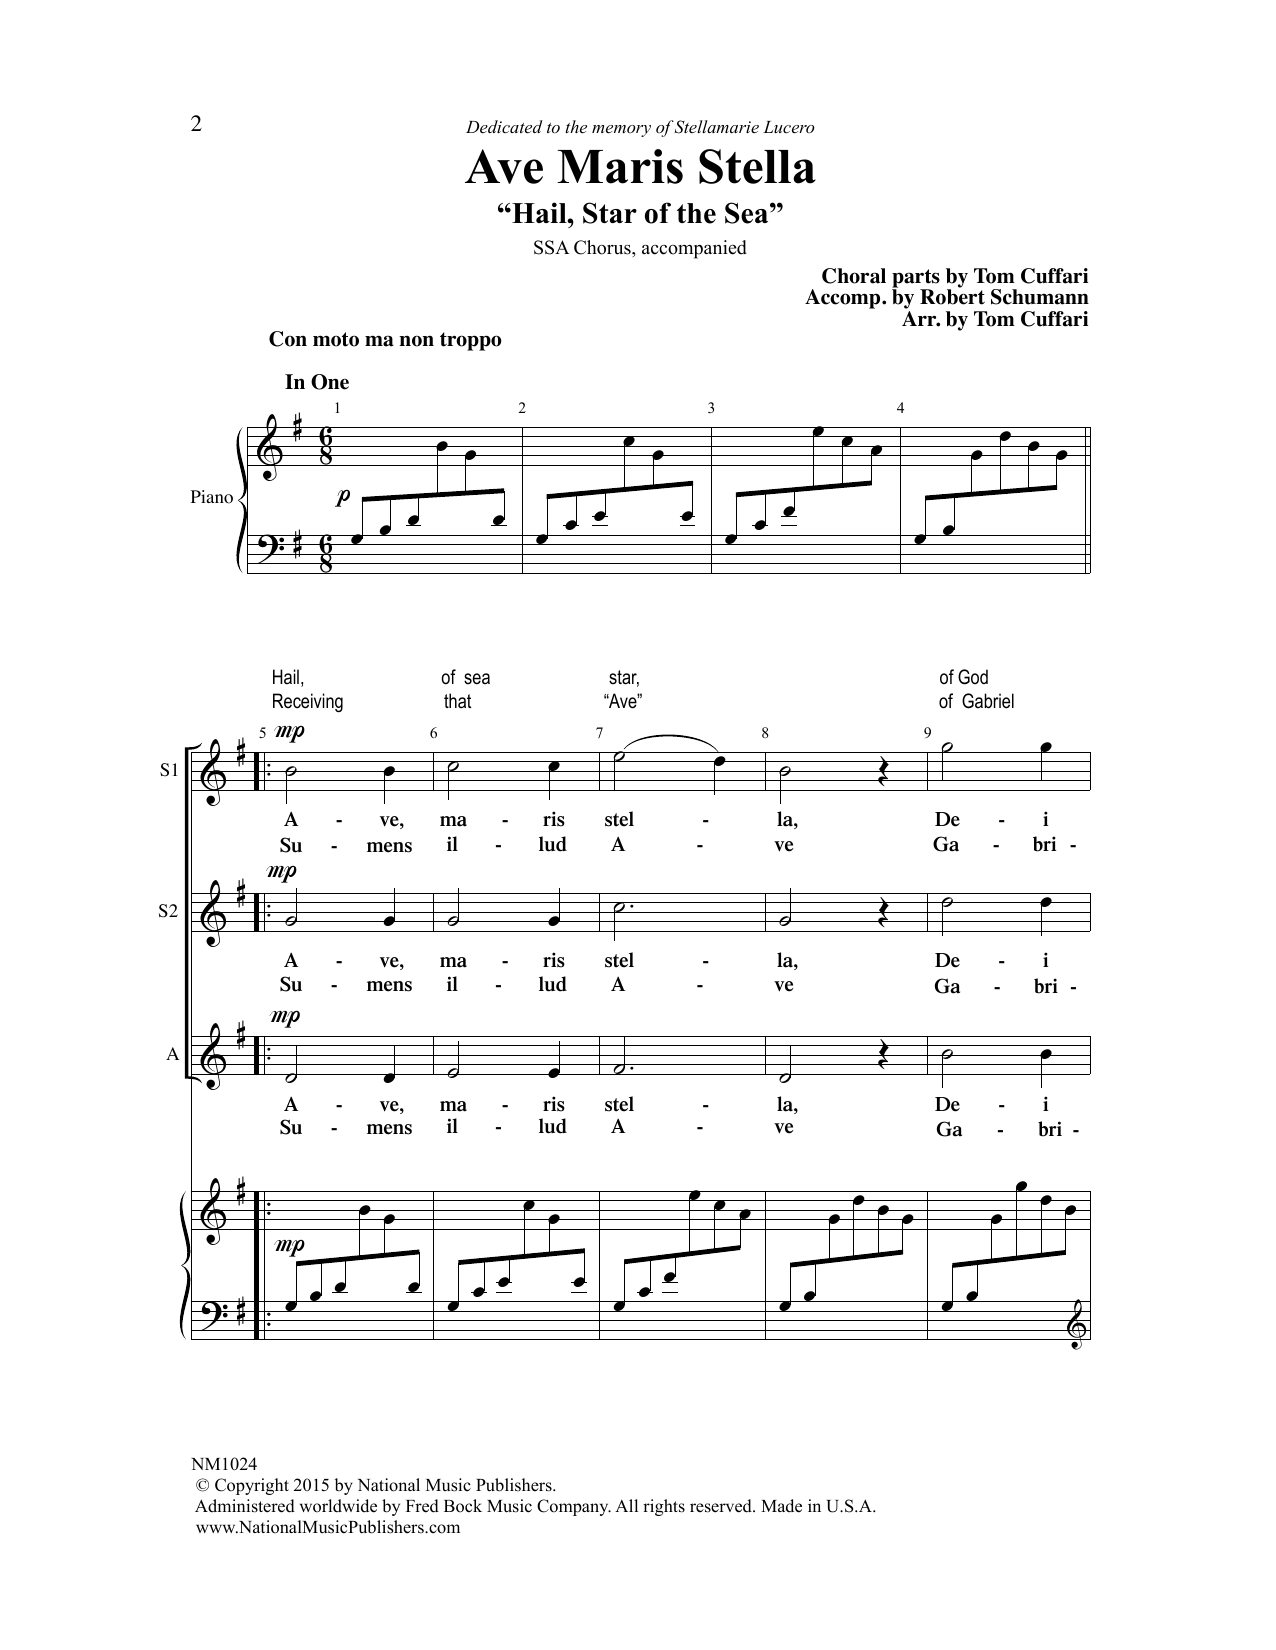 Download Tom Cuffari Ave Maris Stella Sheet Music and learn how to play SSA Choir PDF digital score in minutes